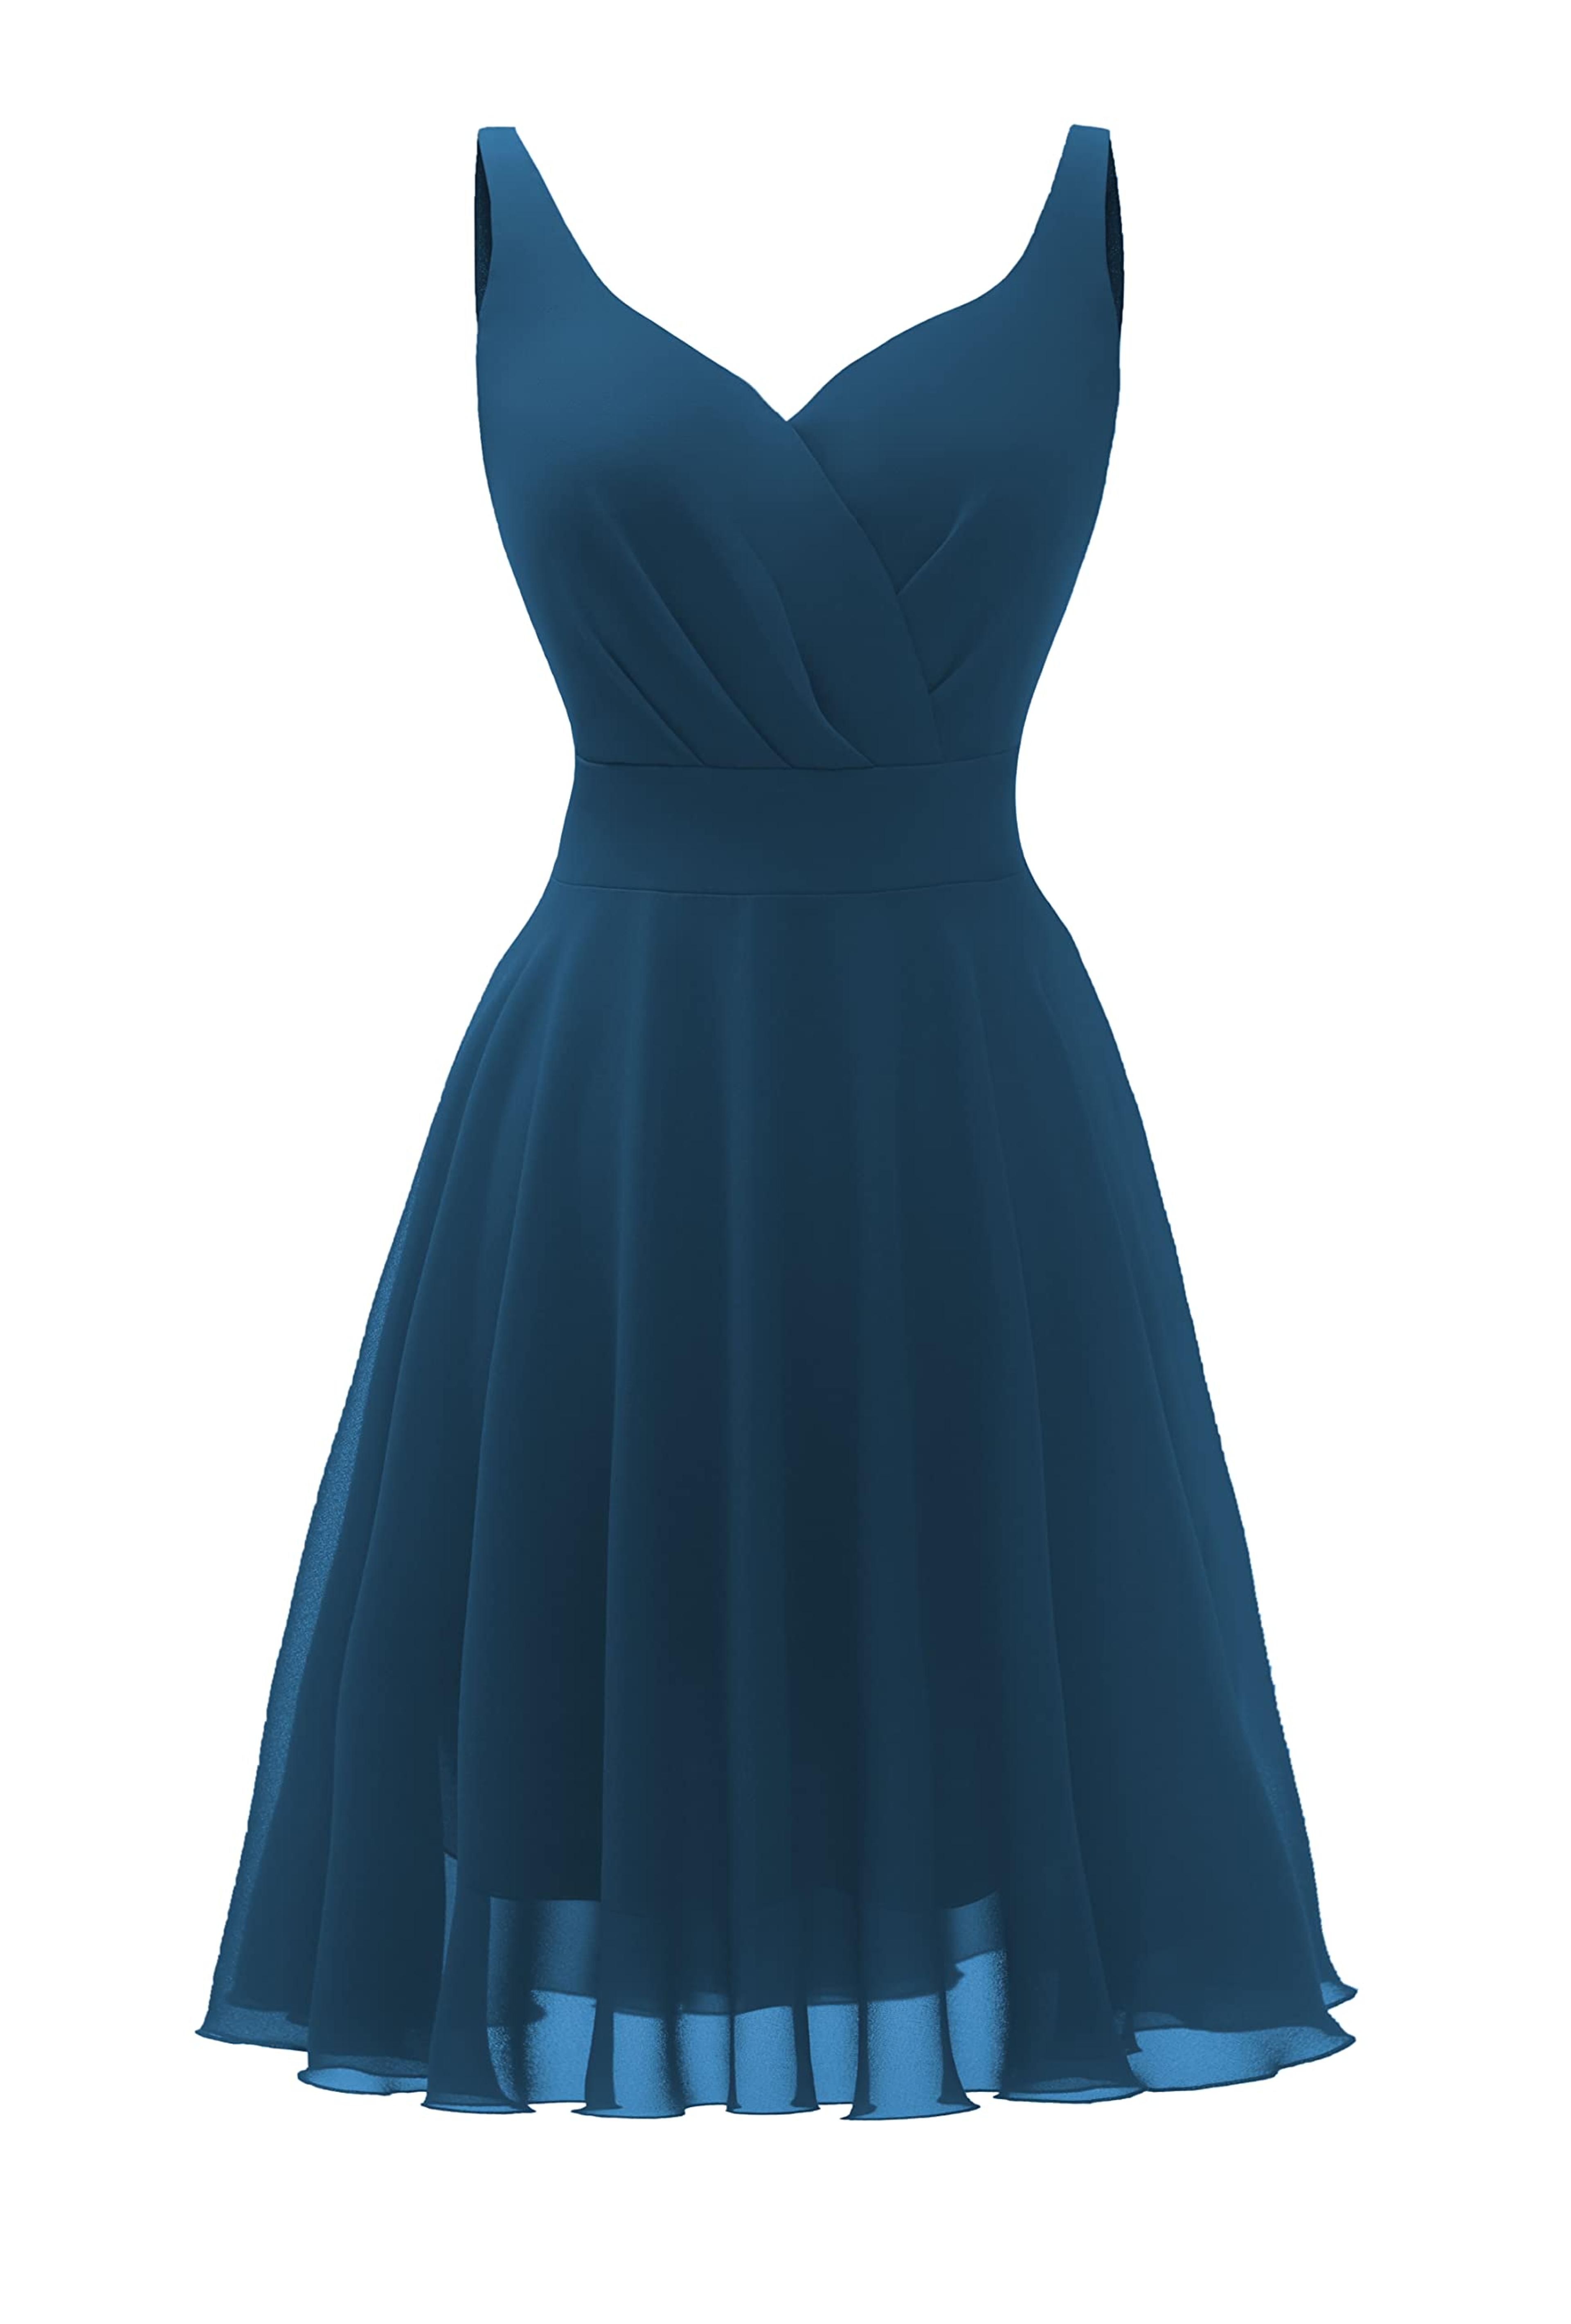 Amazon.com: Dressever Summer Cocktail Dress V-Neck Adjustable Spaghetti Strap Chiffon Sundress with Pockets : Clothing, Shoes & Jewelry